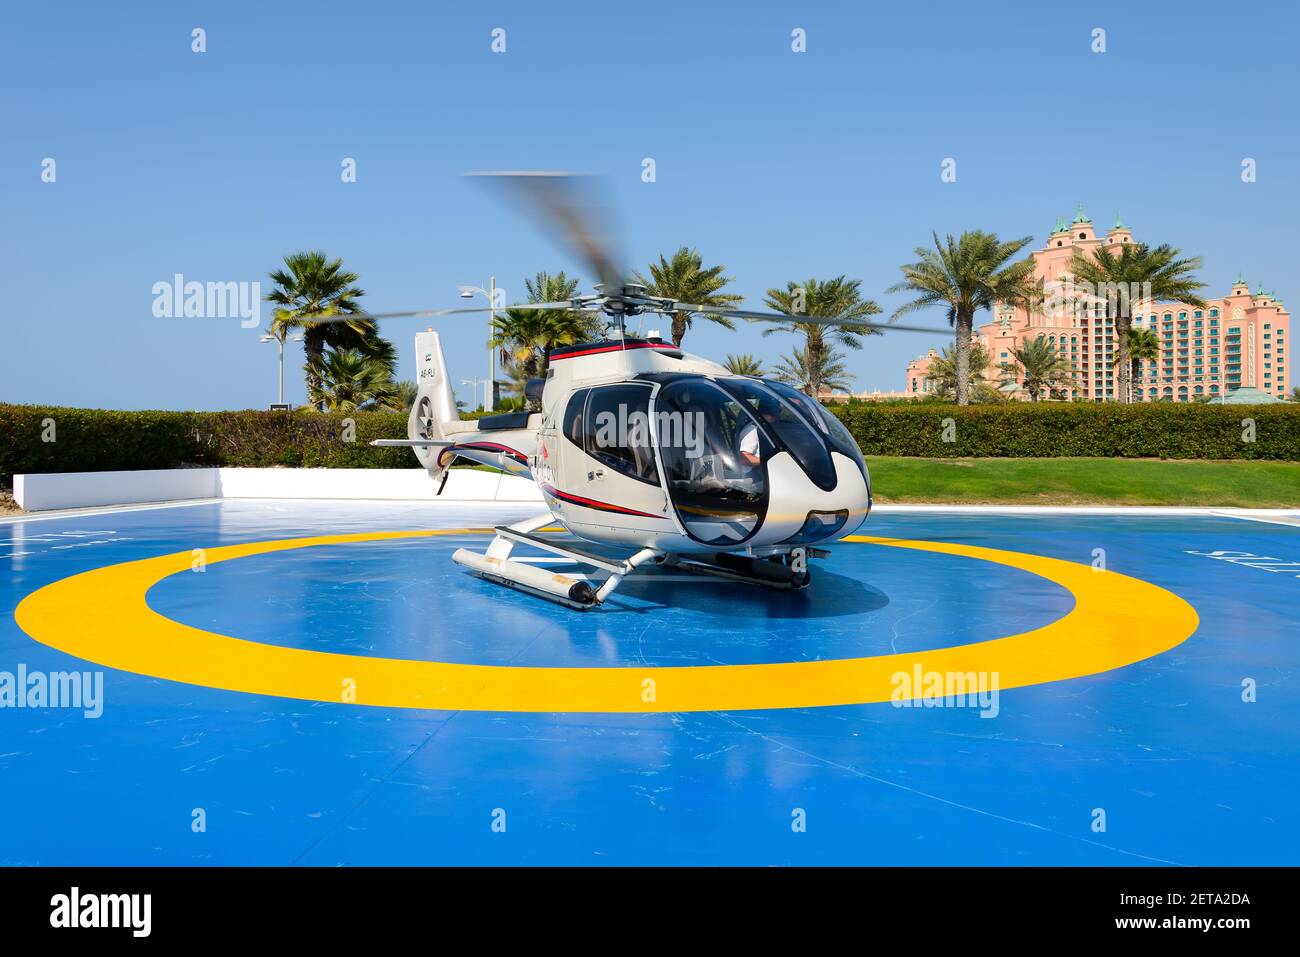 Falcon Aviation Services helicopter Eurocopter EC 130BA at The Palm Jumeirah Helipad in Dubai, United Arab Emirates. Touristic heli flights. Stock Photo